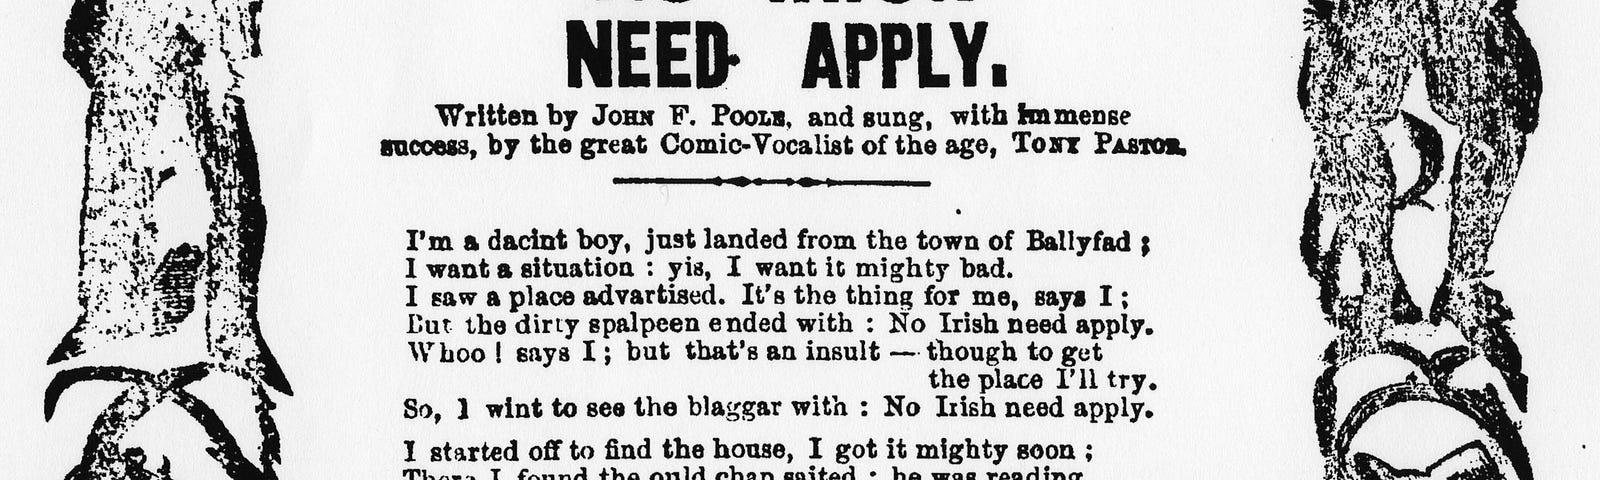 Image of an early twentieth-century song, “No Irish Need Apply”